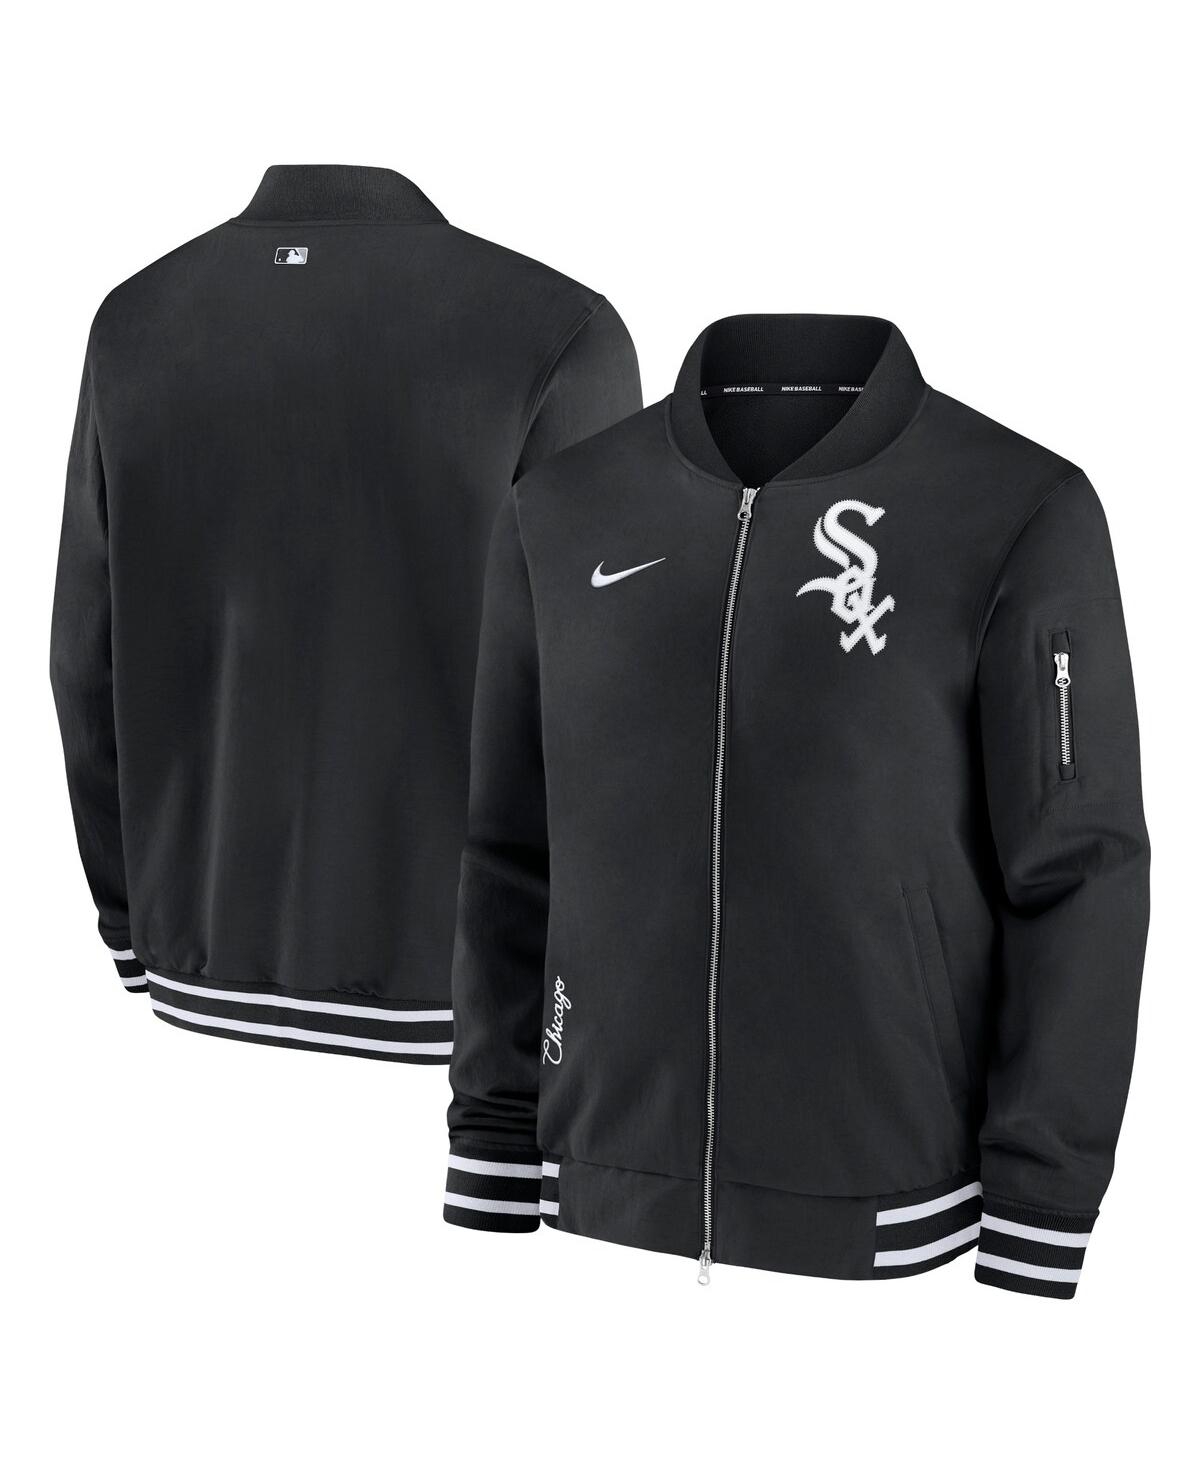 Men's Nike Black Chicago White Sox Authentic Collection Full-Zip Bomber Jacket - Black